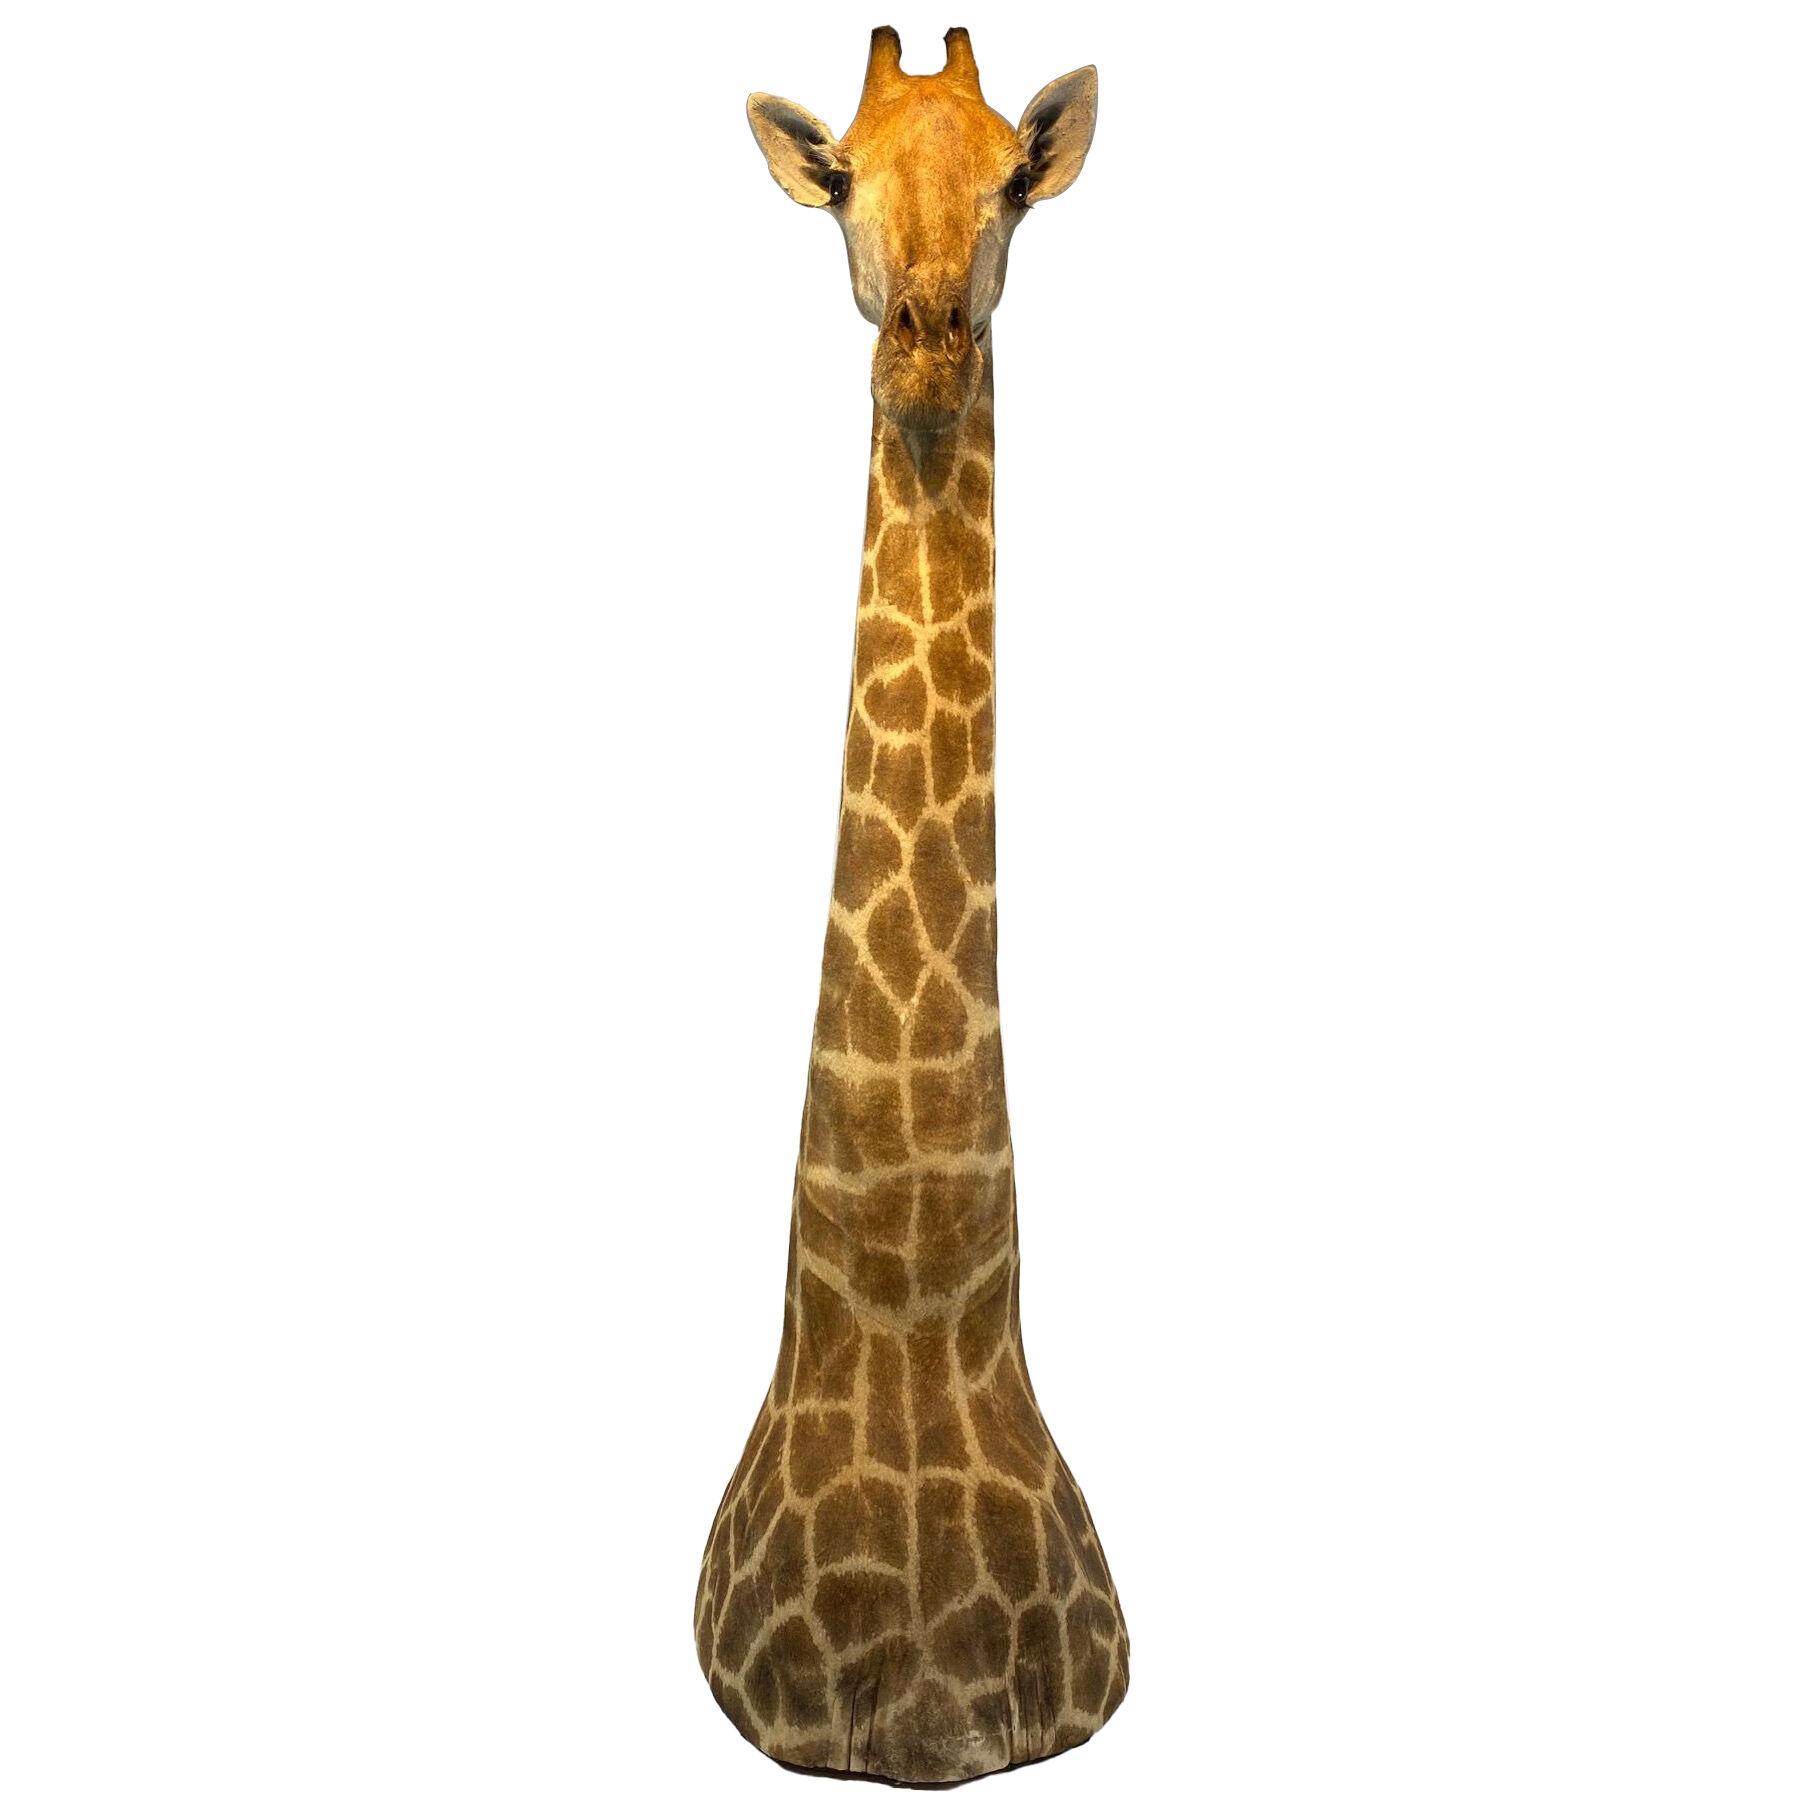 A vintage Taxidermy Giraffe